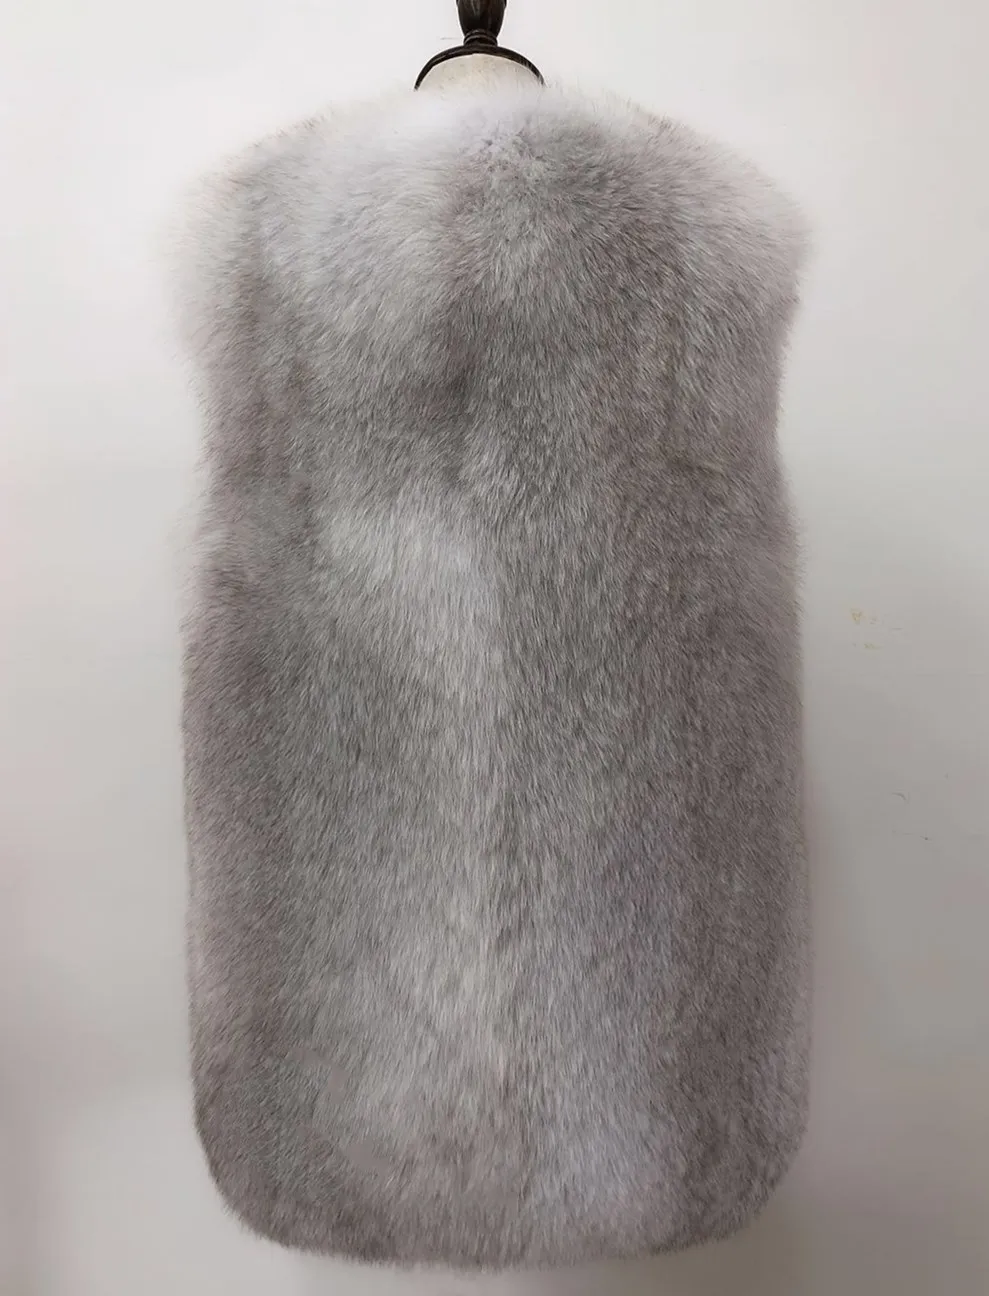 Real Fox Fur Vest Wholeskin Luxury Silver Fox Fur Jacket Thick Warm Natural Fur Gilet Luxury Fashion Sleeveless Coat enlarge